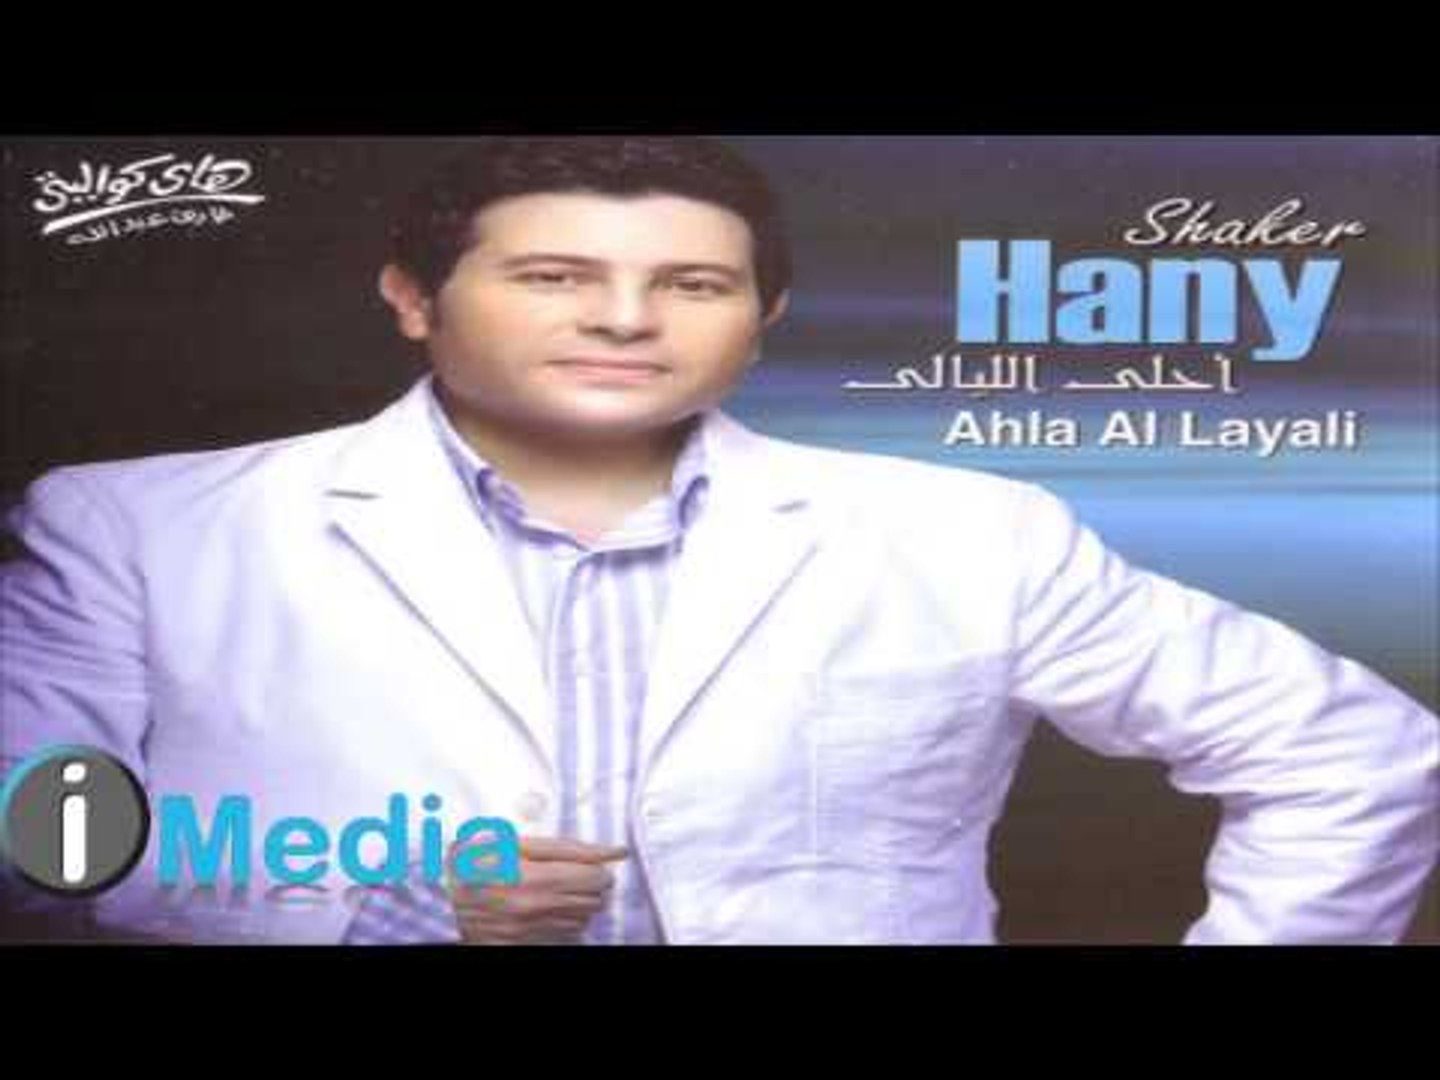 Hany Shaker Feat Sherine - Ana Alby Leik / هاني شاكر و شيرين - أنا قلبي ليك  - video Dailymotion